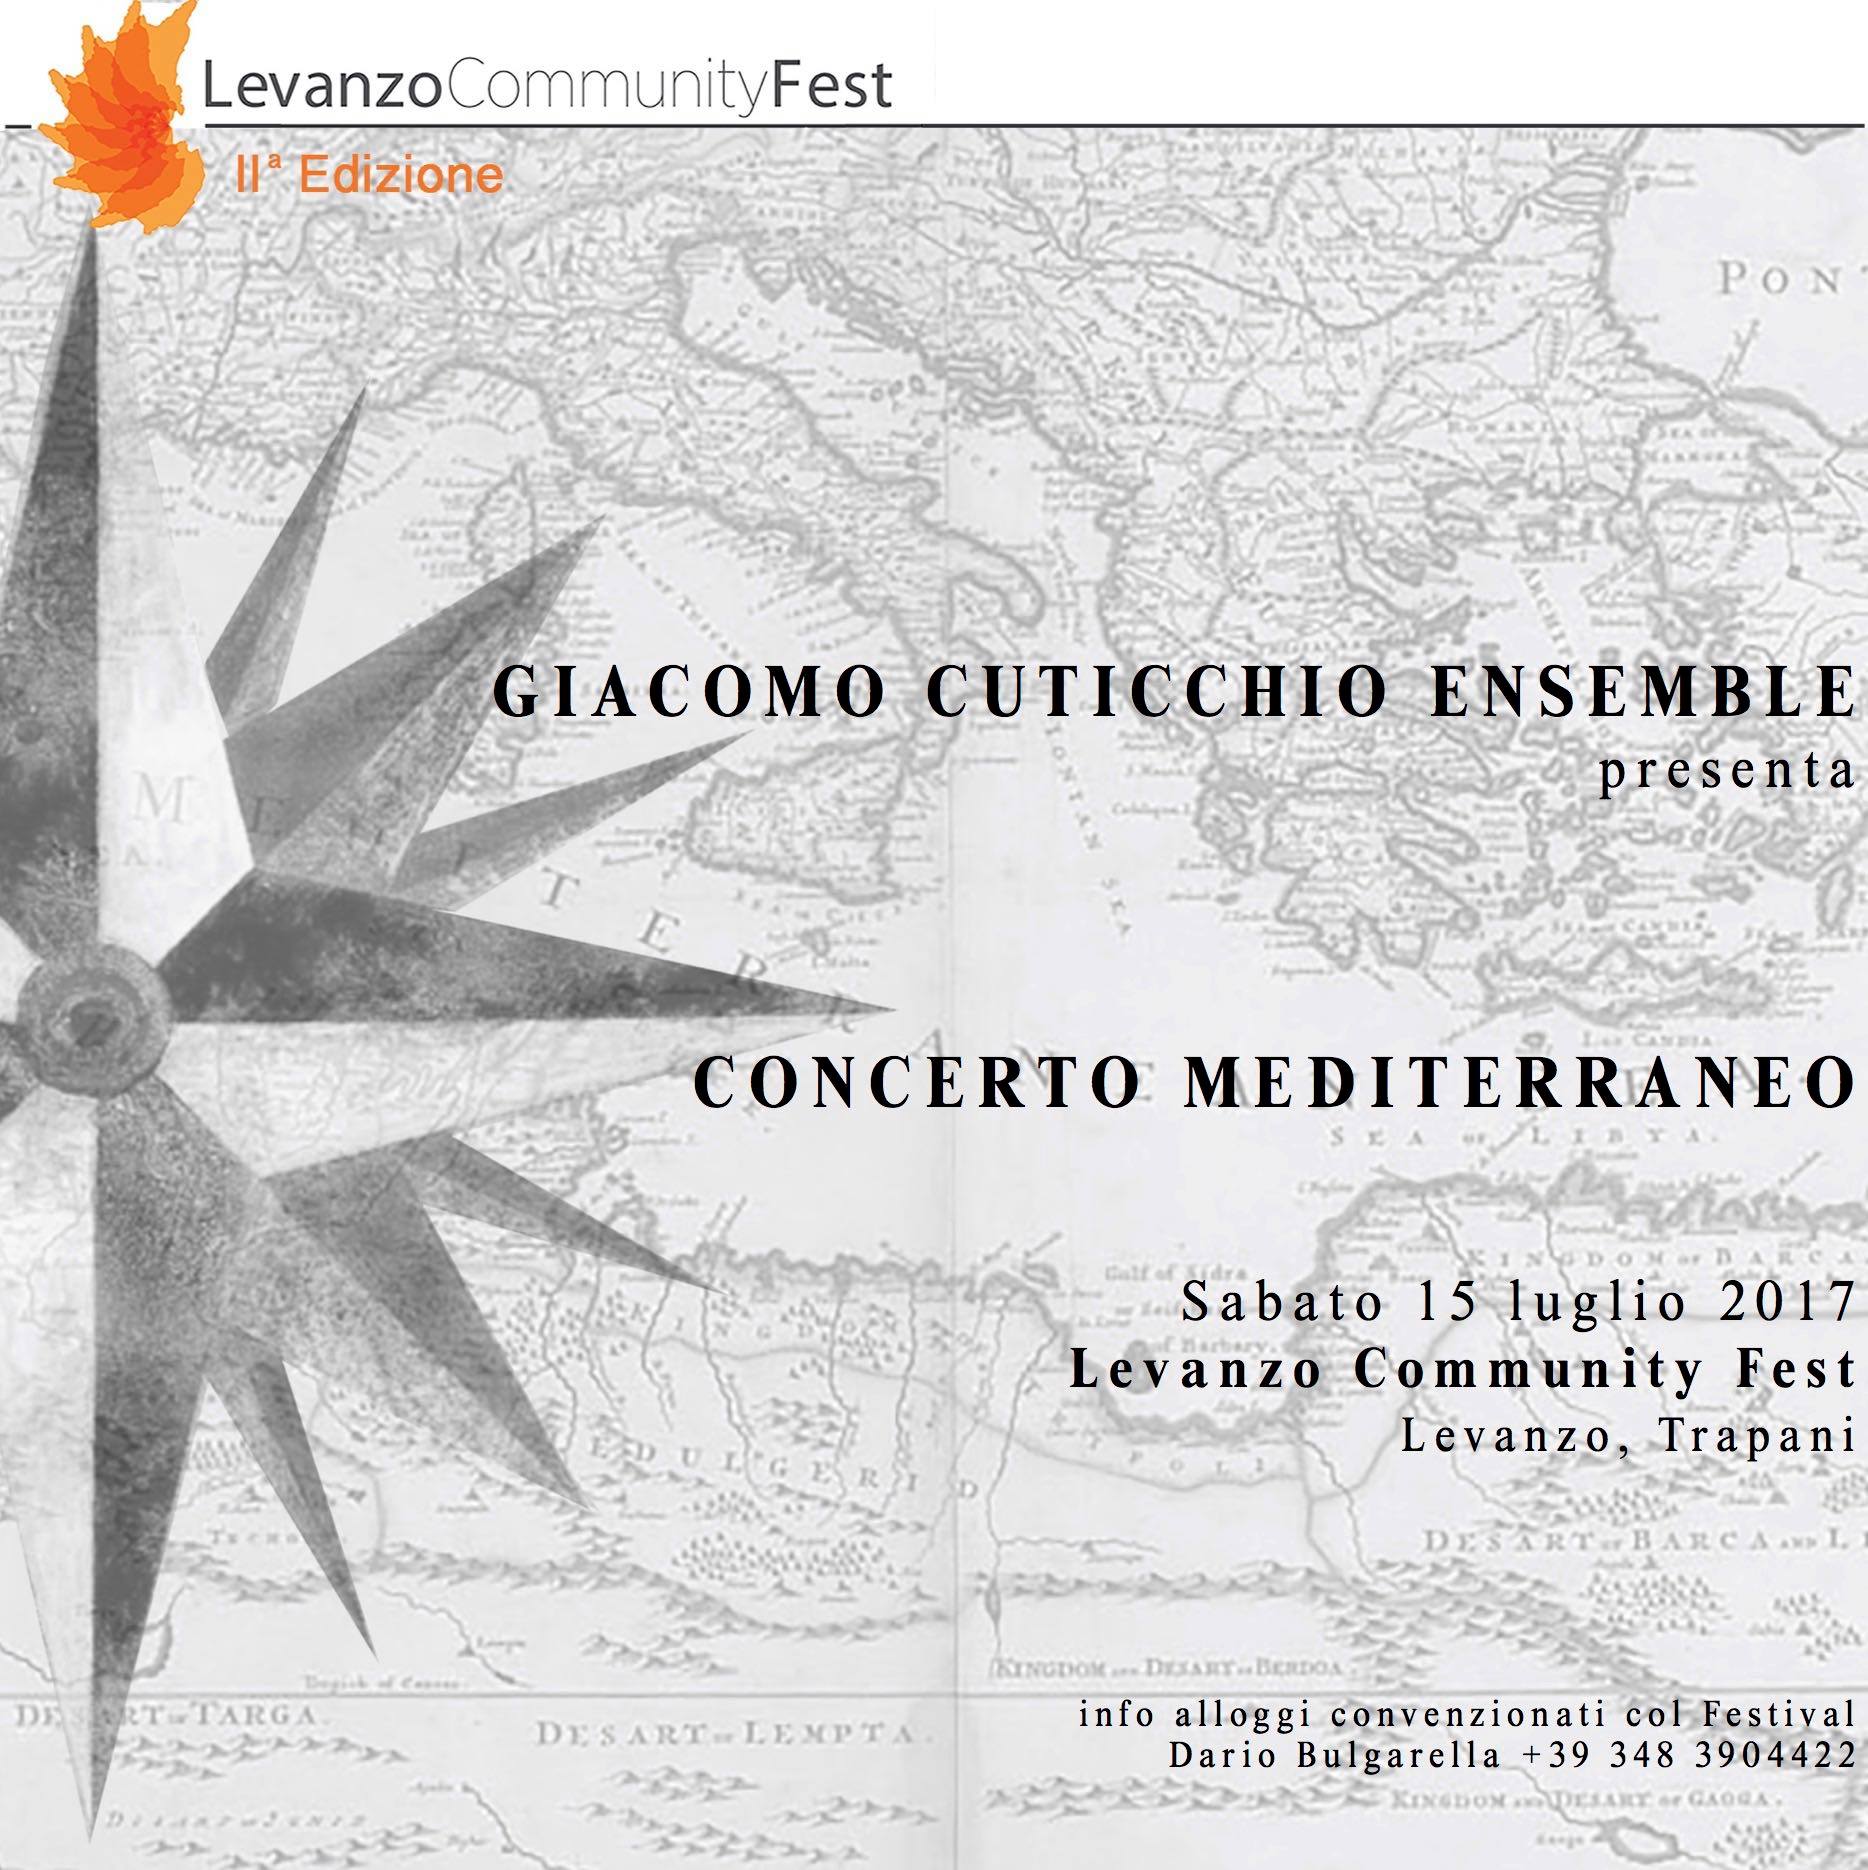 Concerto Mediterraneo performed by Giacomo Cuticchio Ensemble